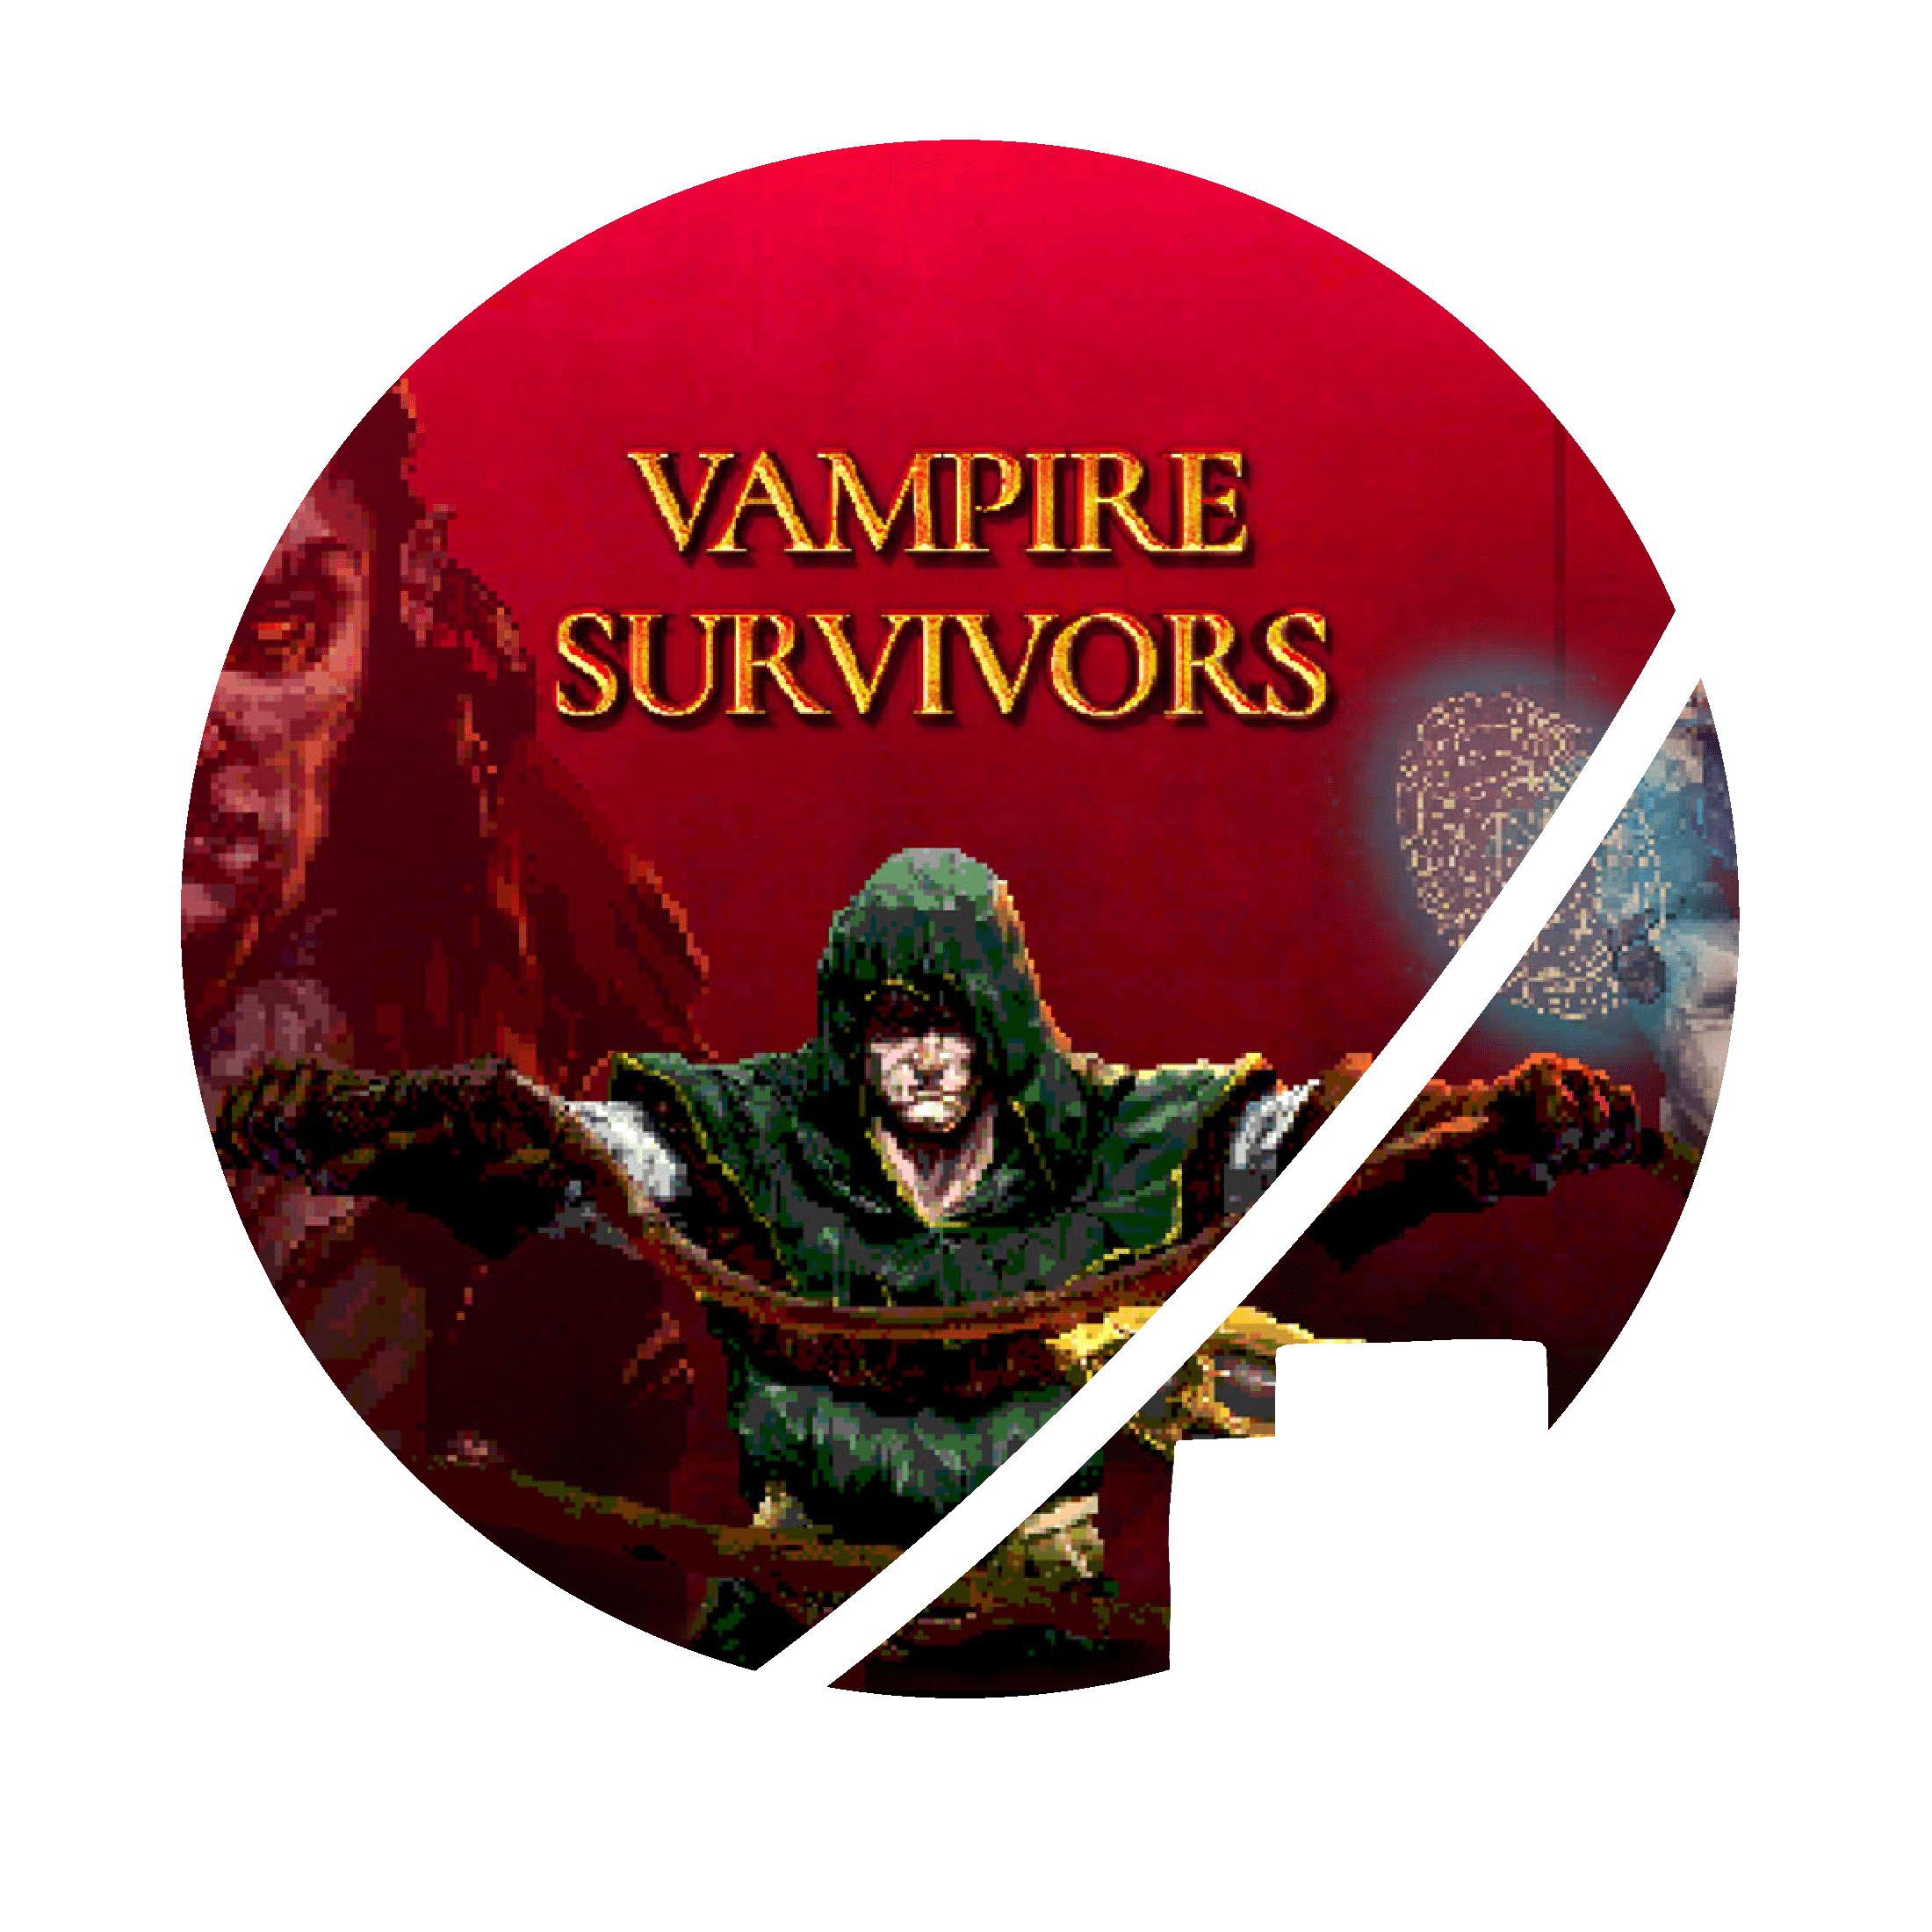 Vampire Survivors review